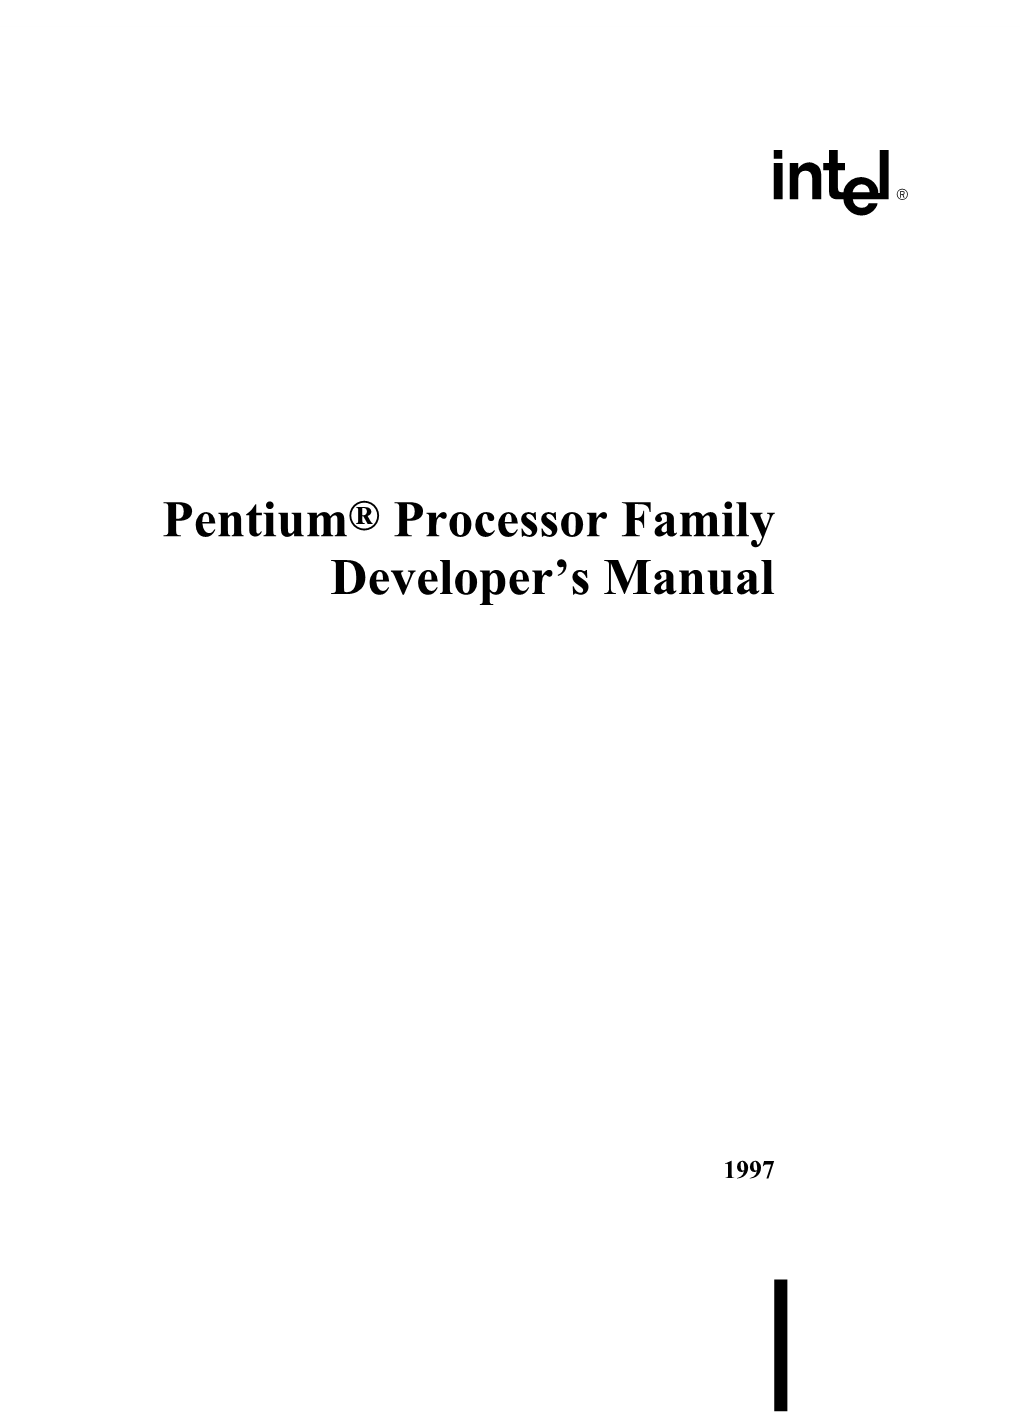 Pentium® Processor Family Developer's Manual